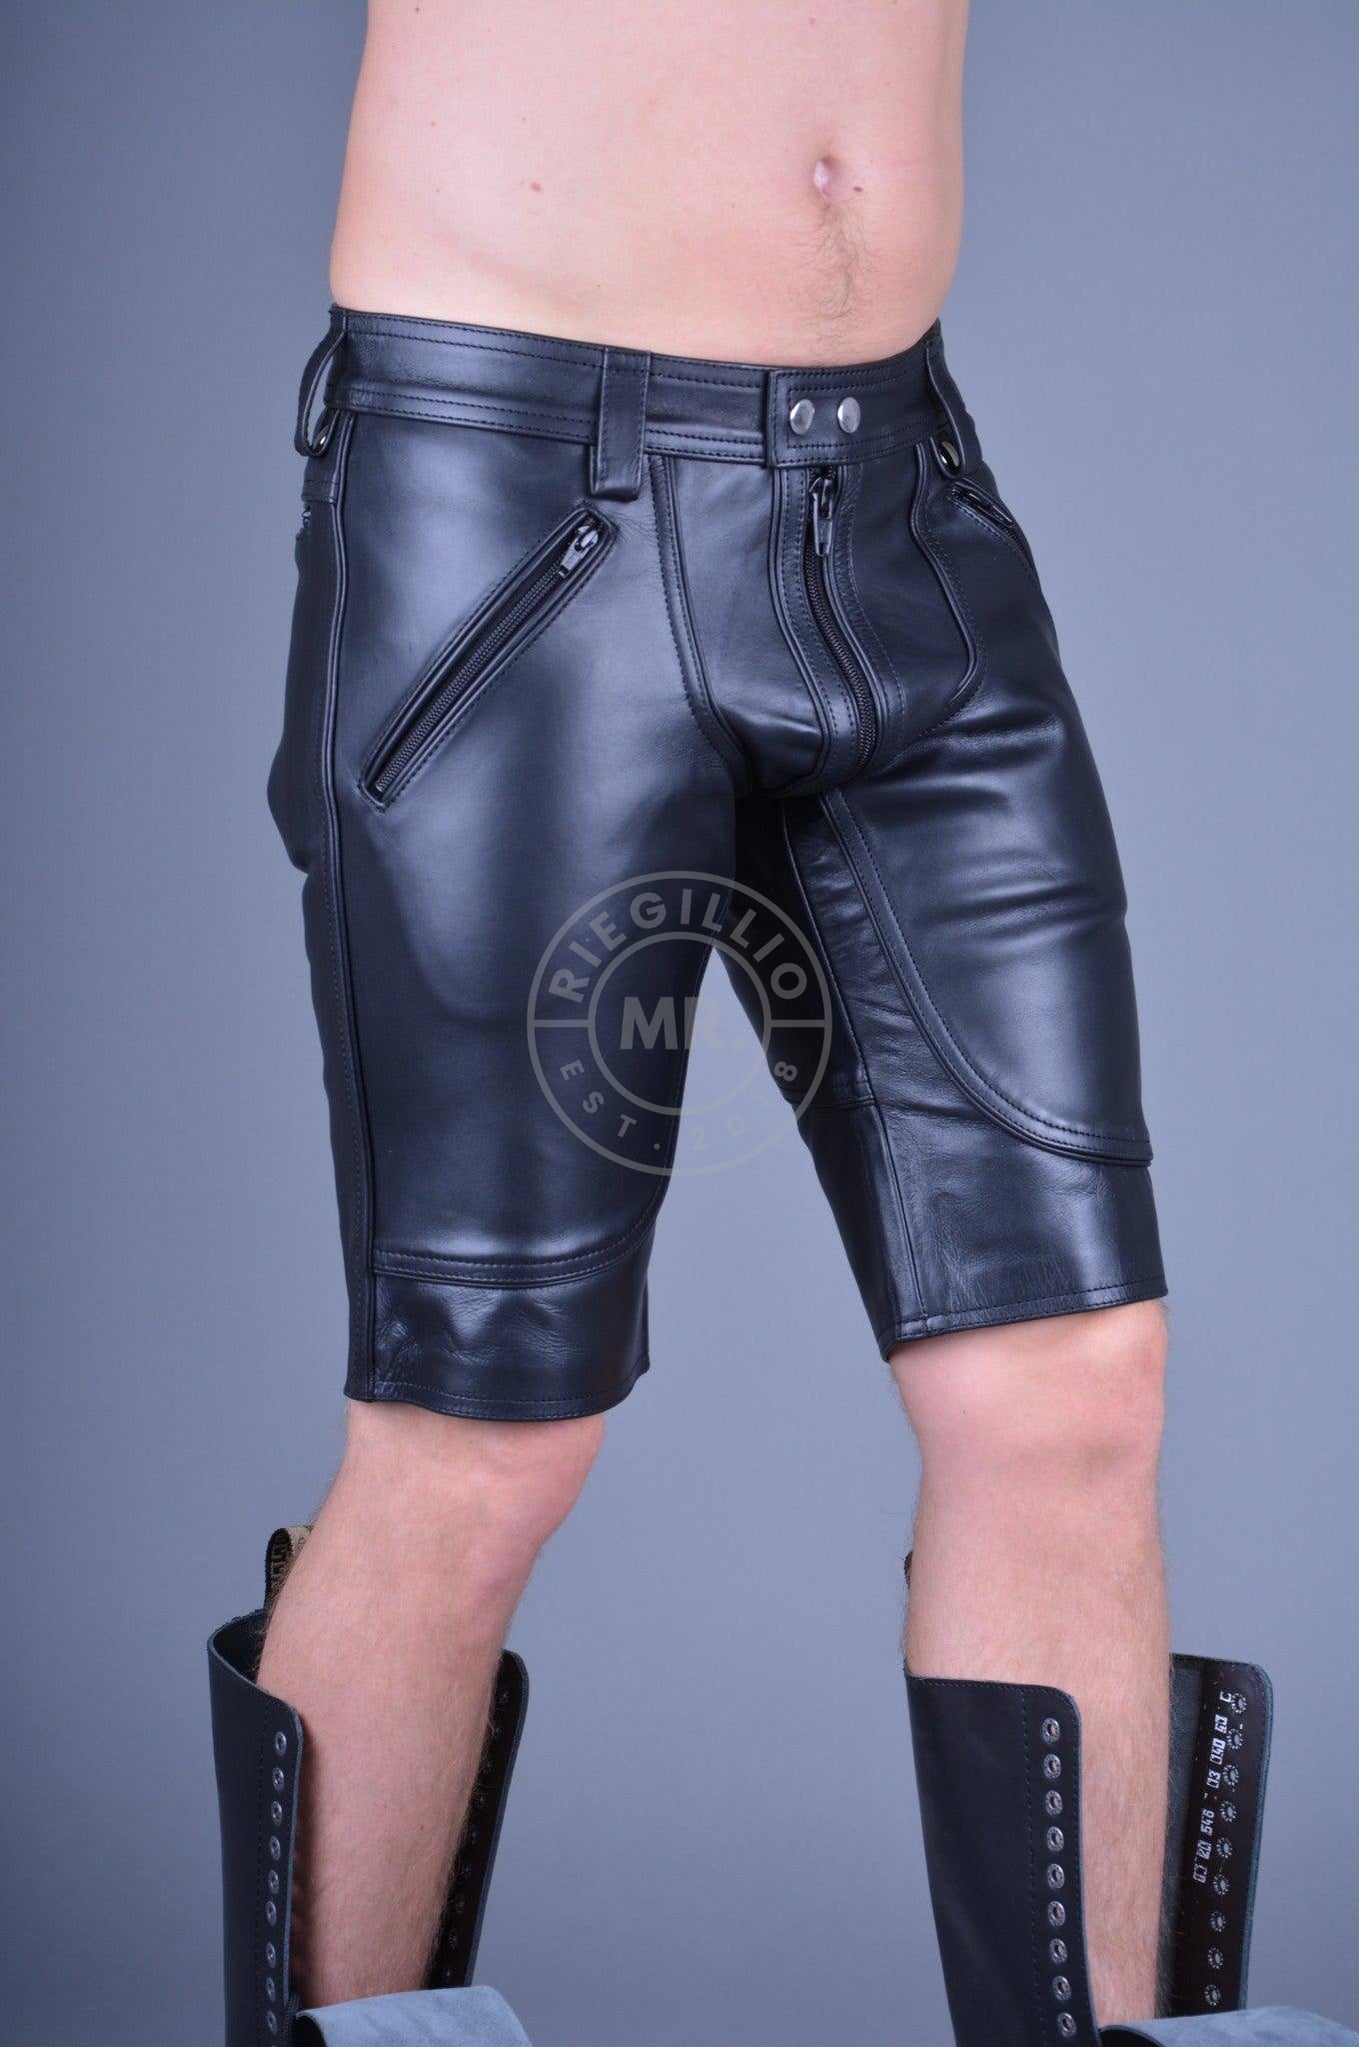 Mister B Leather FXXXer Shorts - Black at MR. Riegillio